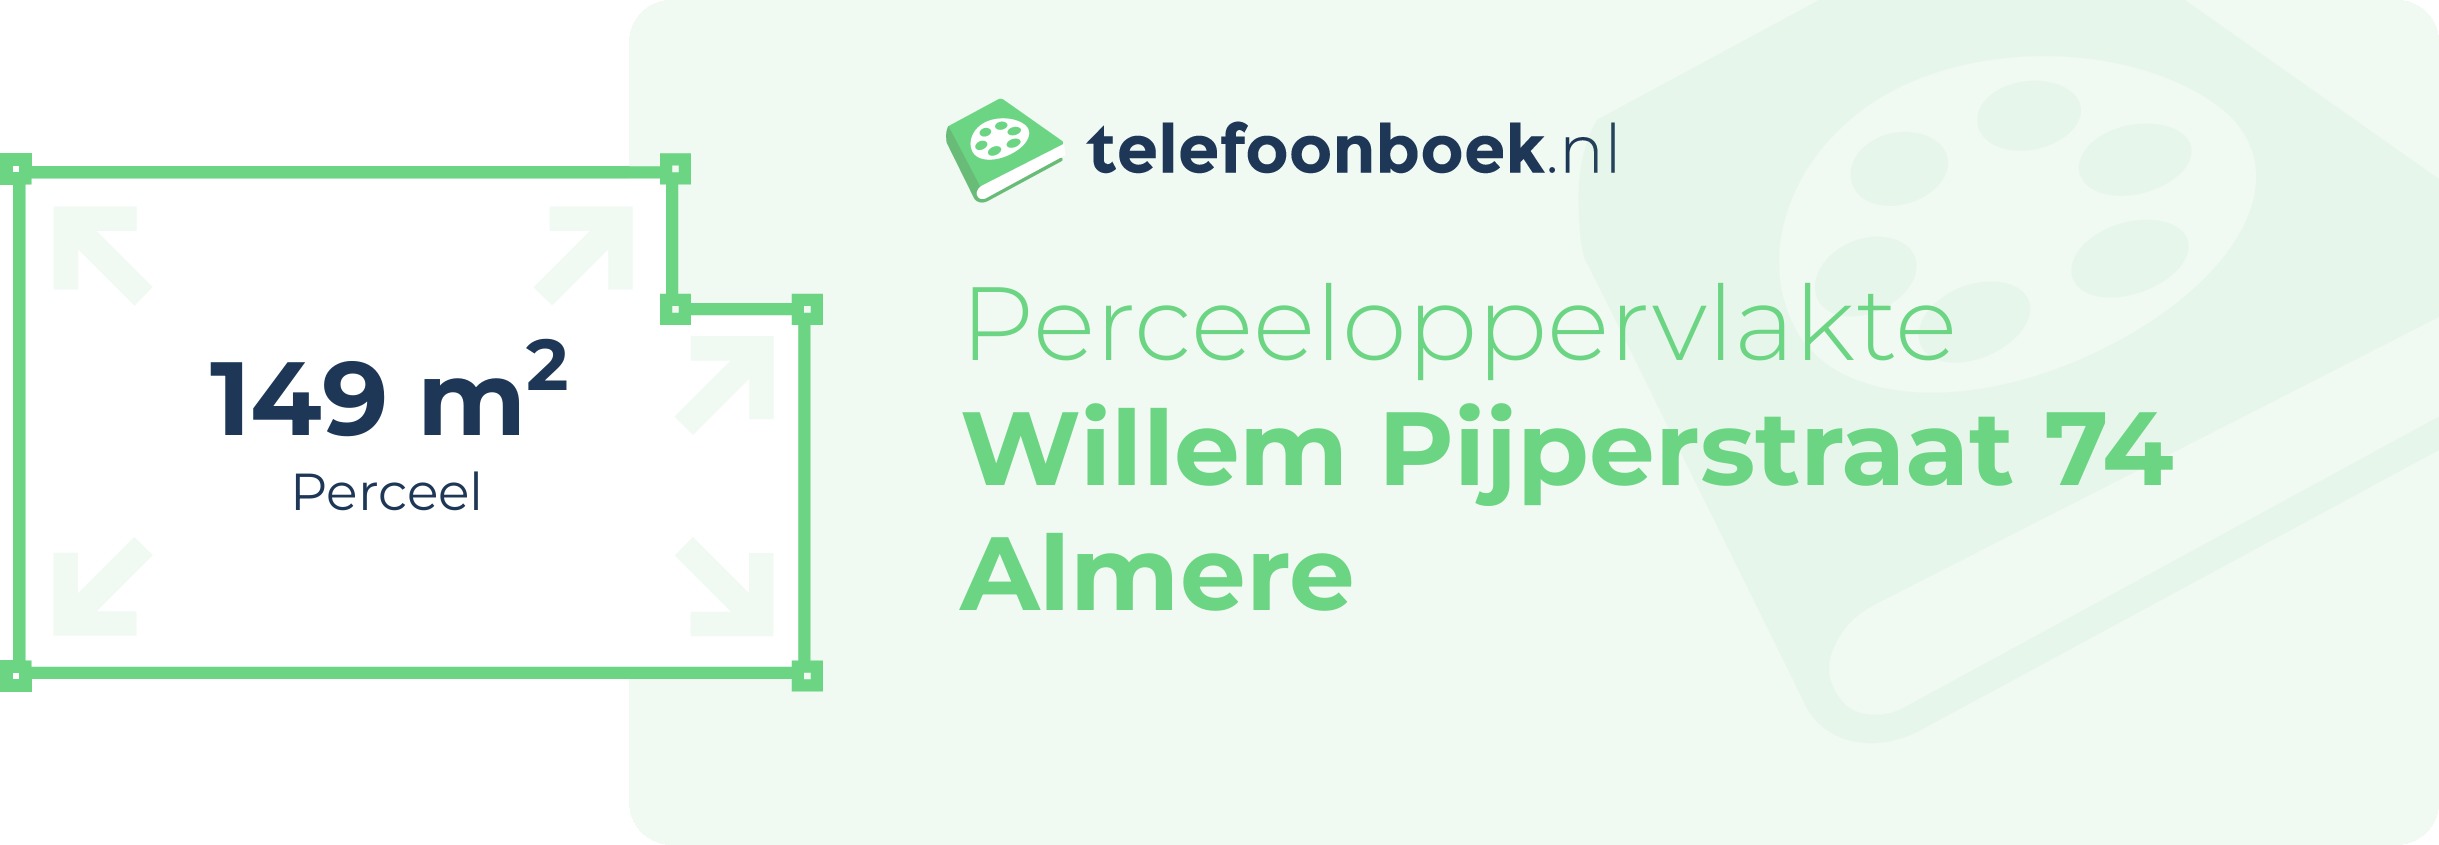 Perceeloppervlakte Willem Pijperstraat 74 Almere